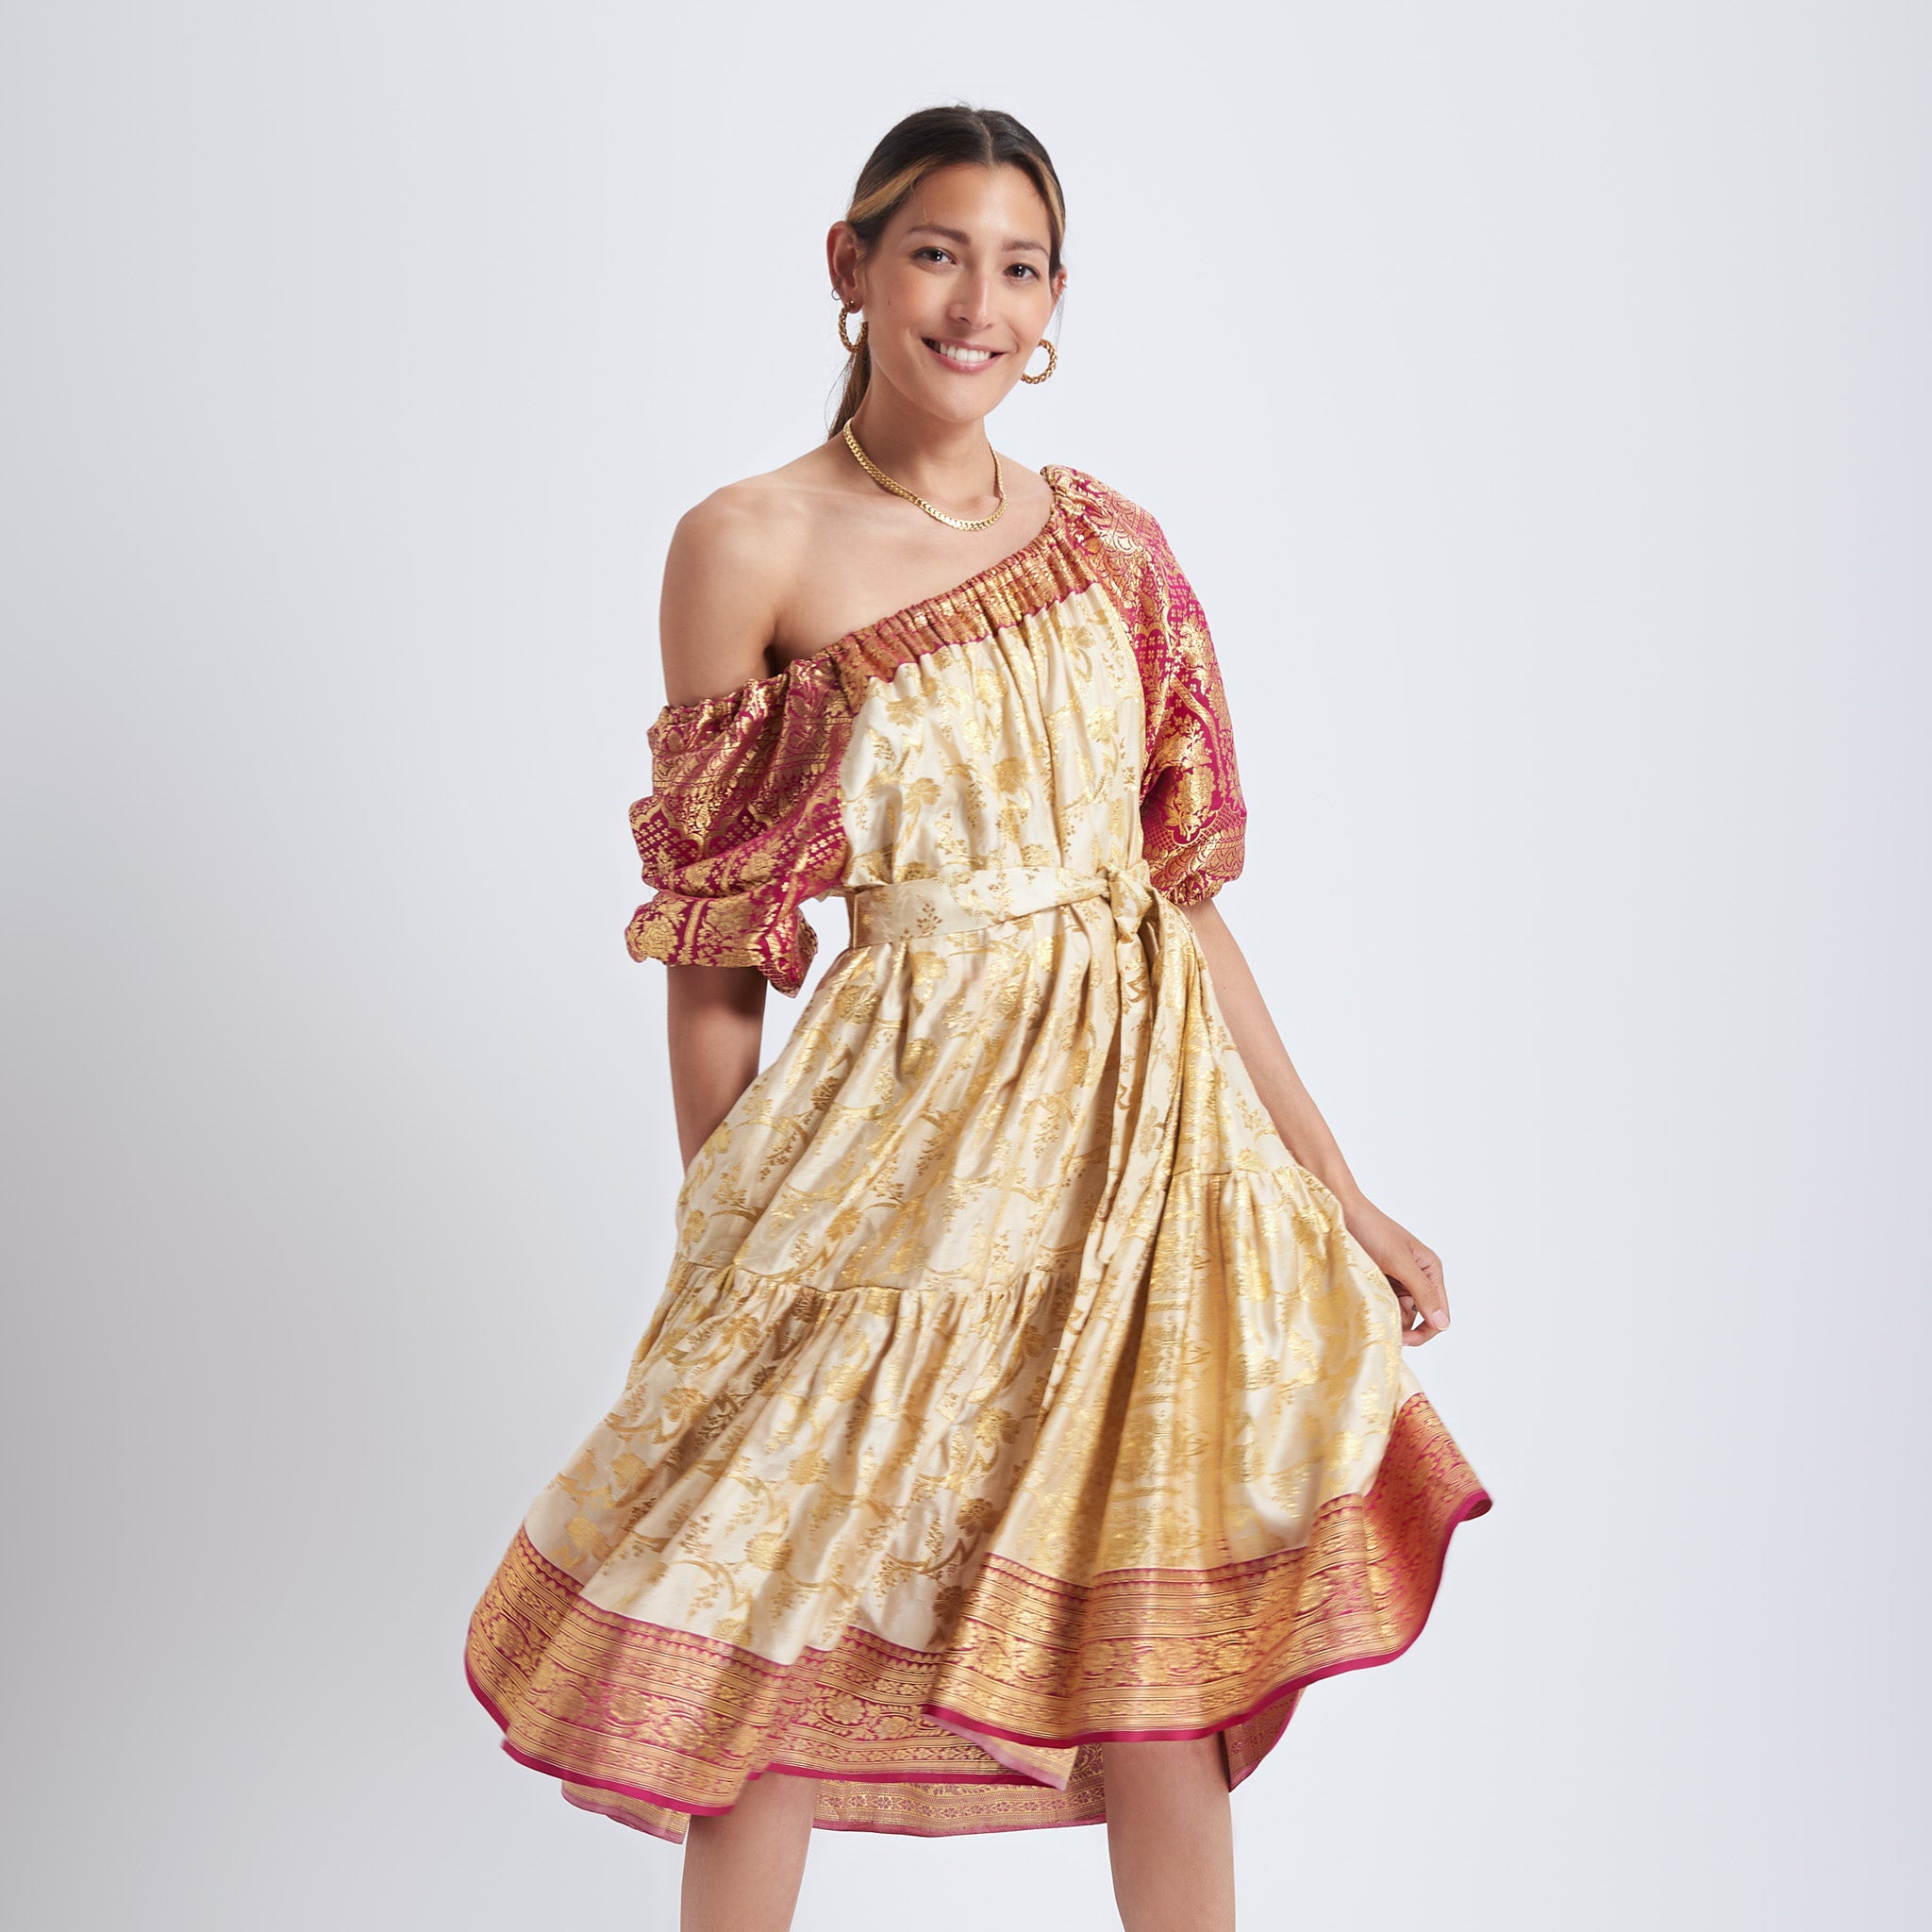 Ausus - Vintage Silk Sari Celestial Gold Sari Dress